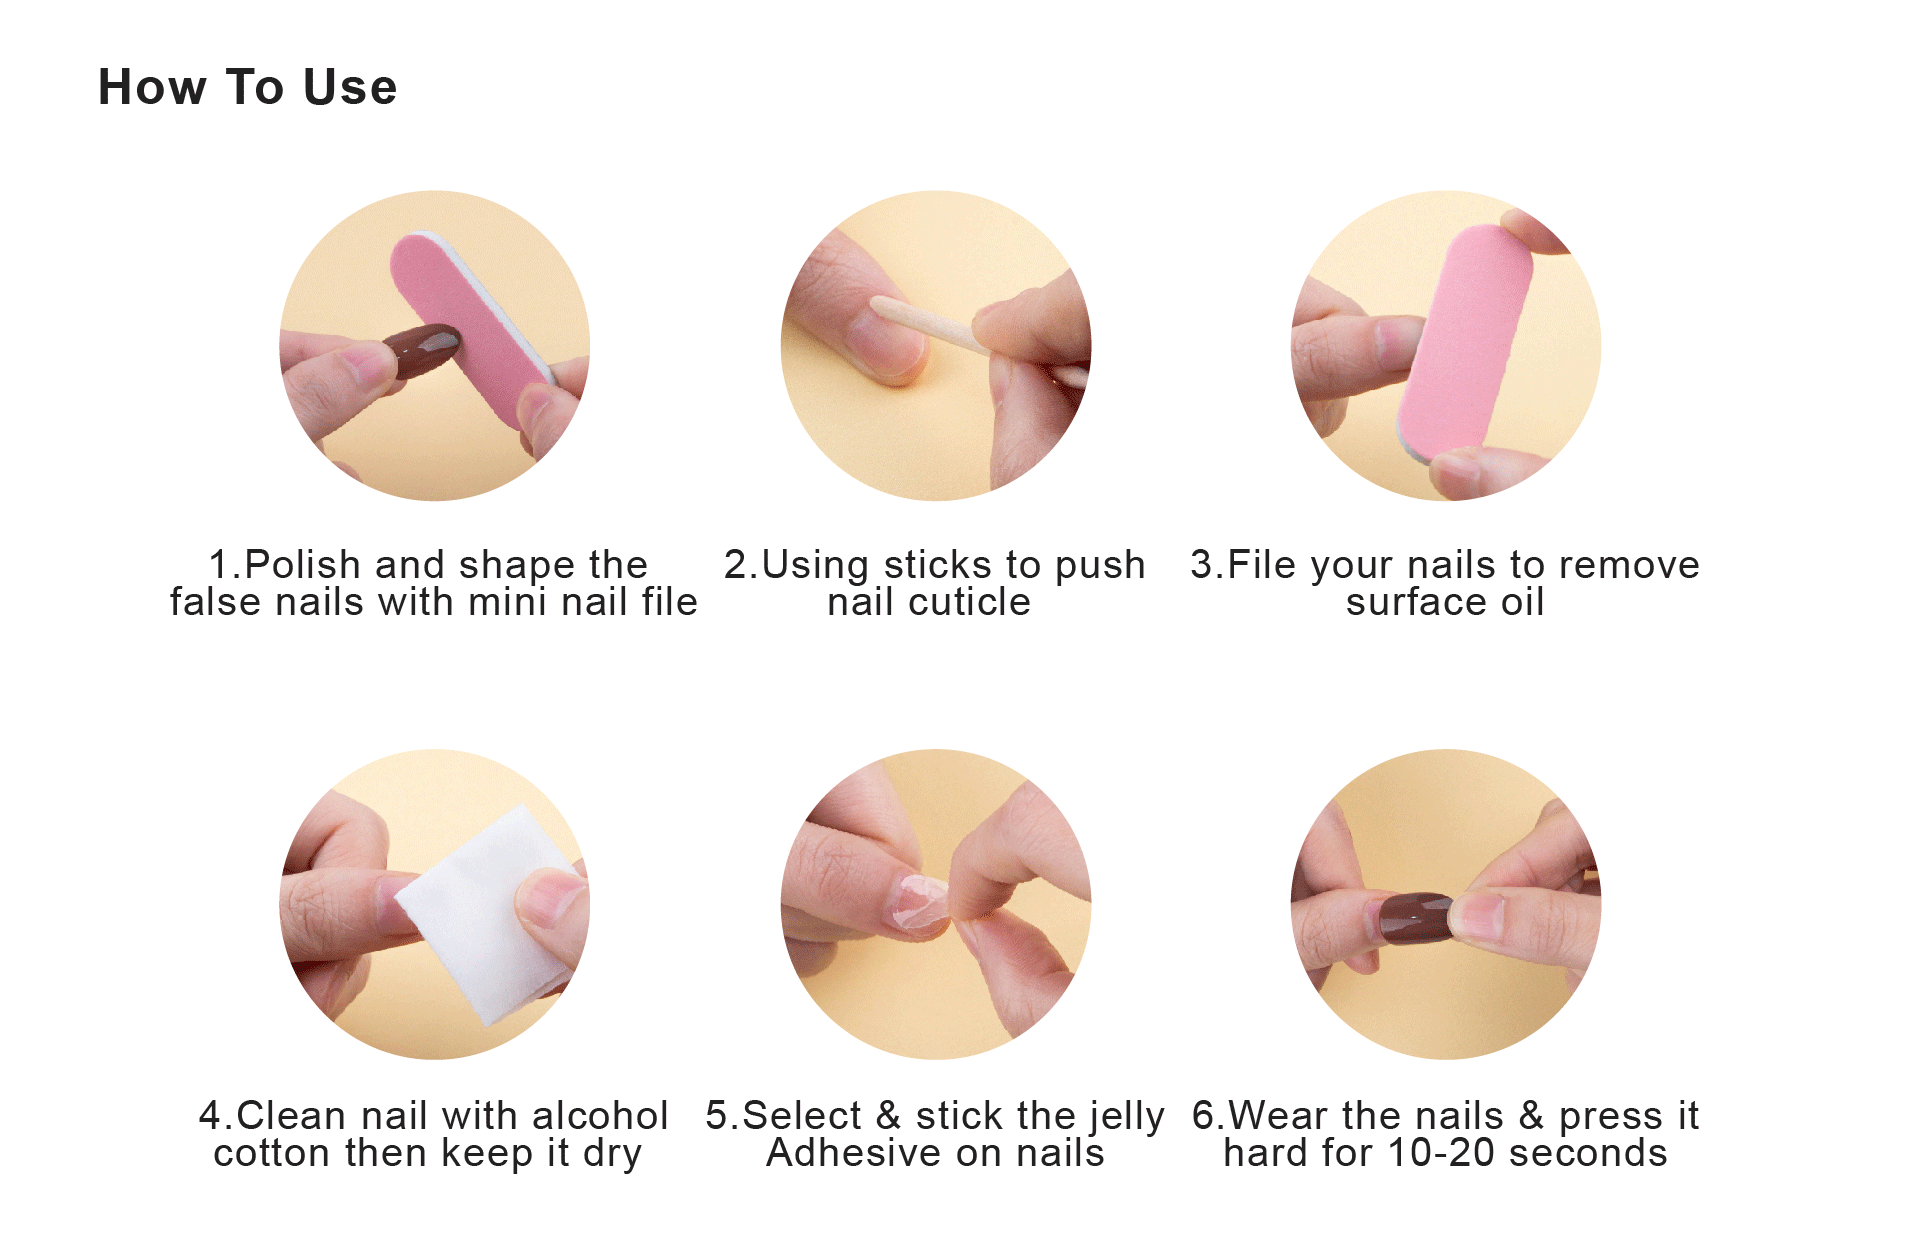 Nail Glue Remover Glue Off for False Nails, BettyCora Press ON Nails Glue  Remover Fake Nail Adhesives Remover Nail Glue Debonder Nail Tips Remover